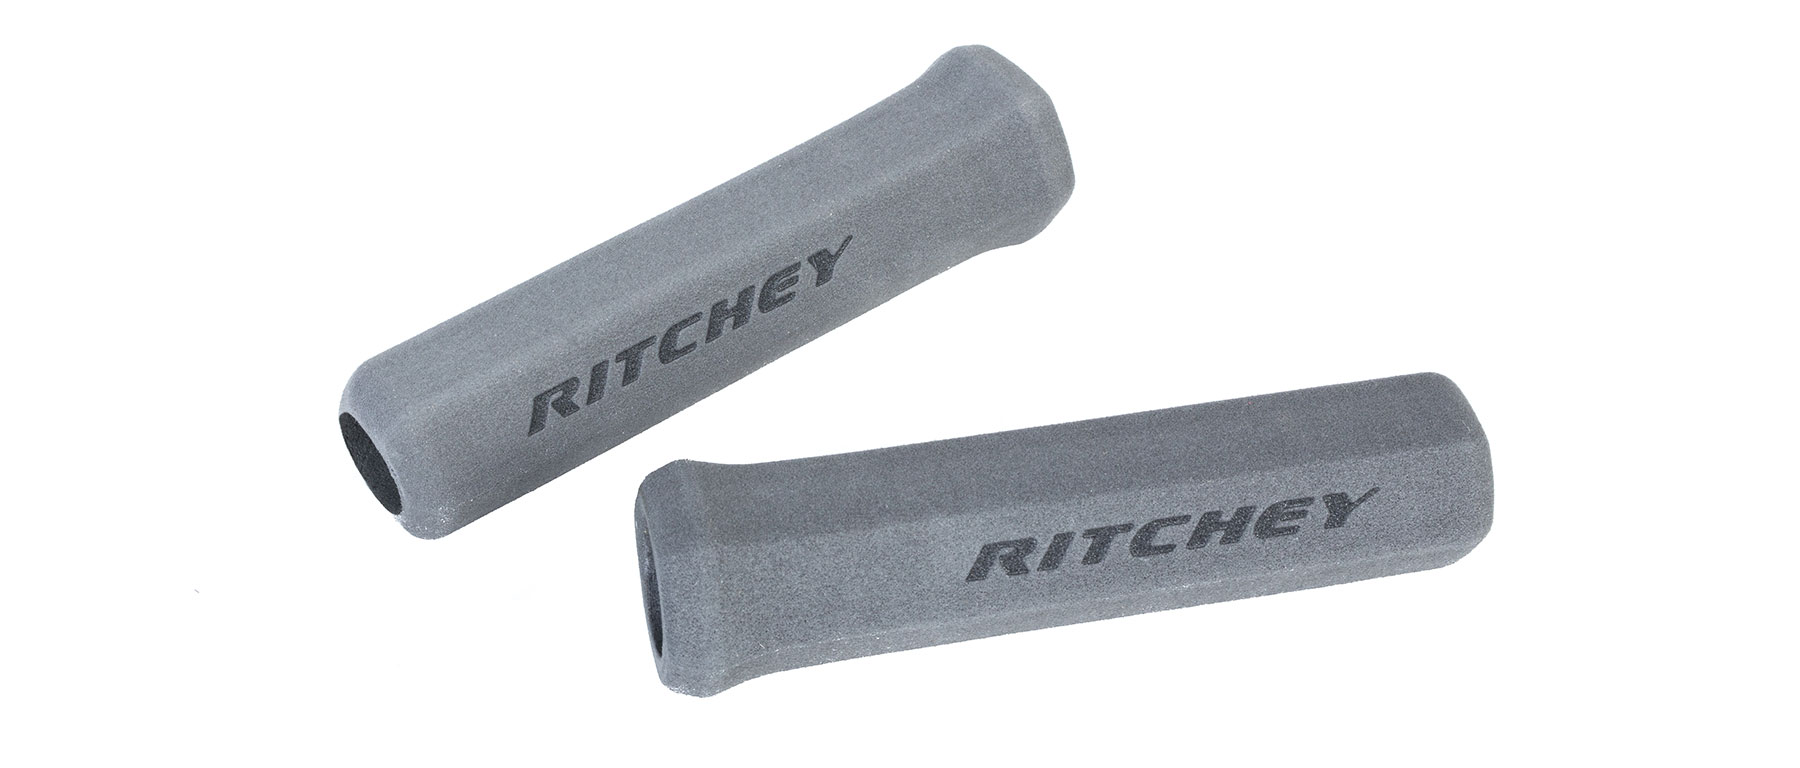 Ritchey Superlogic Grips